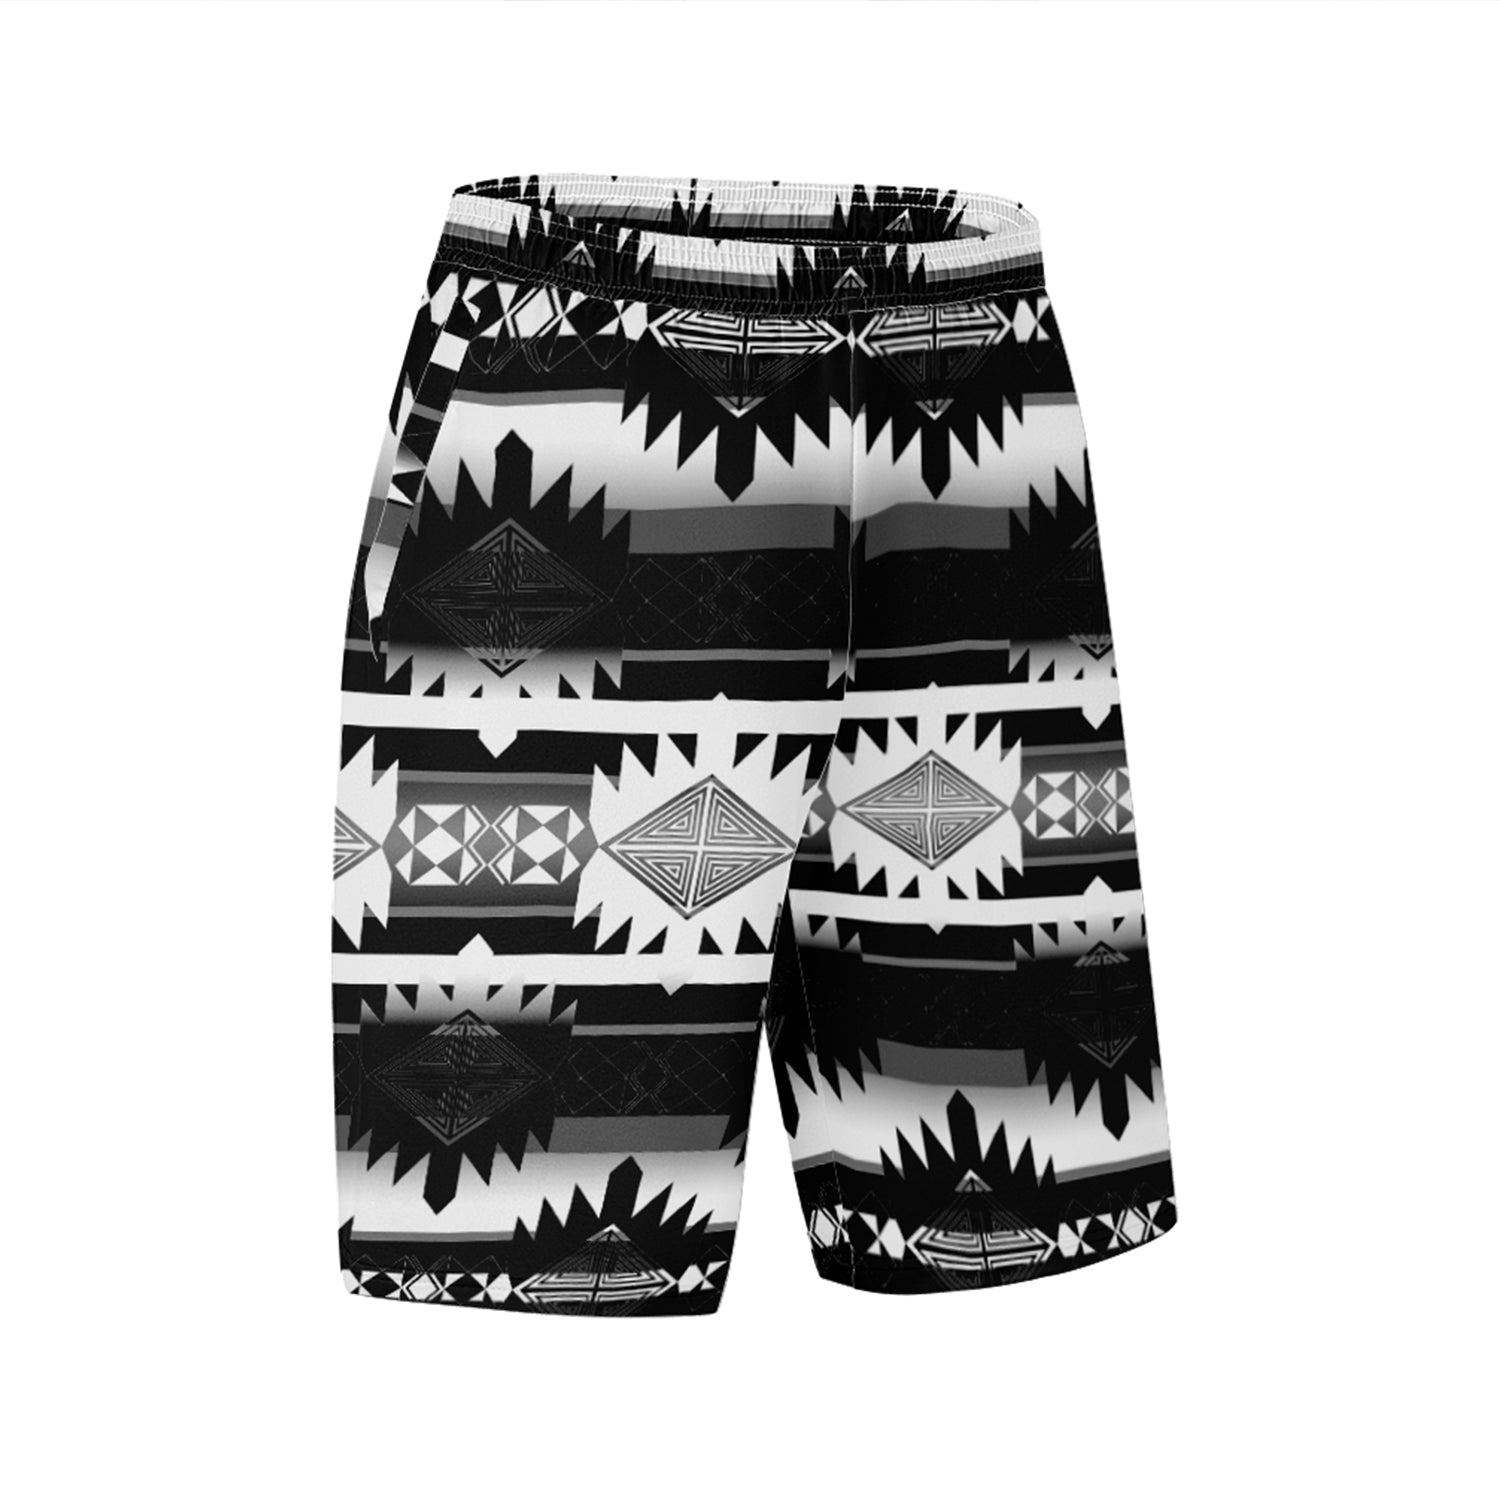 Okotoks Black and White Athletic Shorts with Pockets